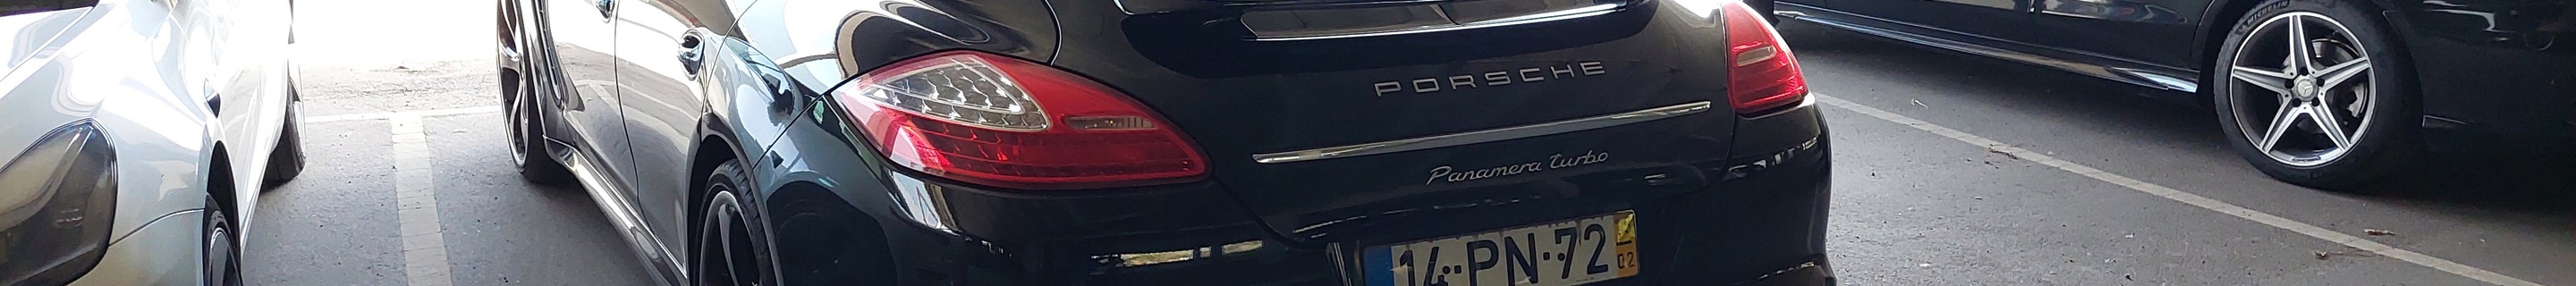 Porsche TechArt Panamera Turbo